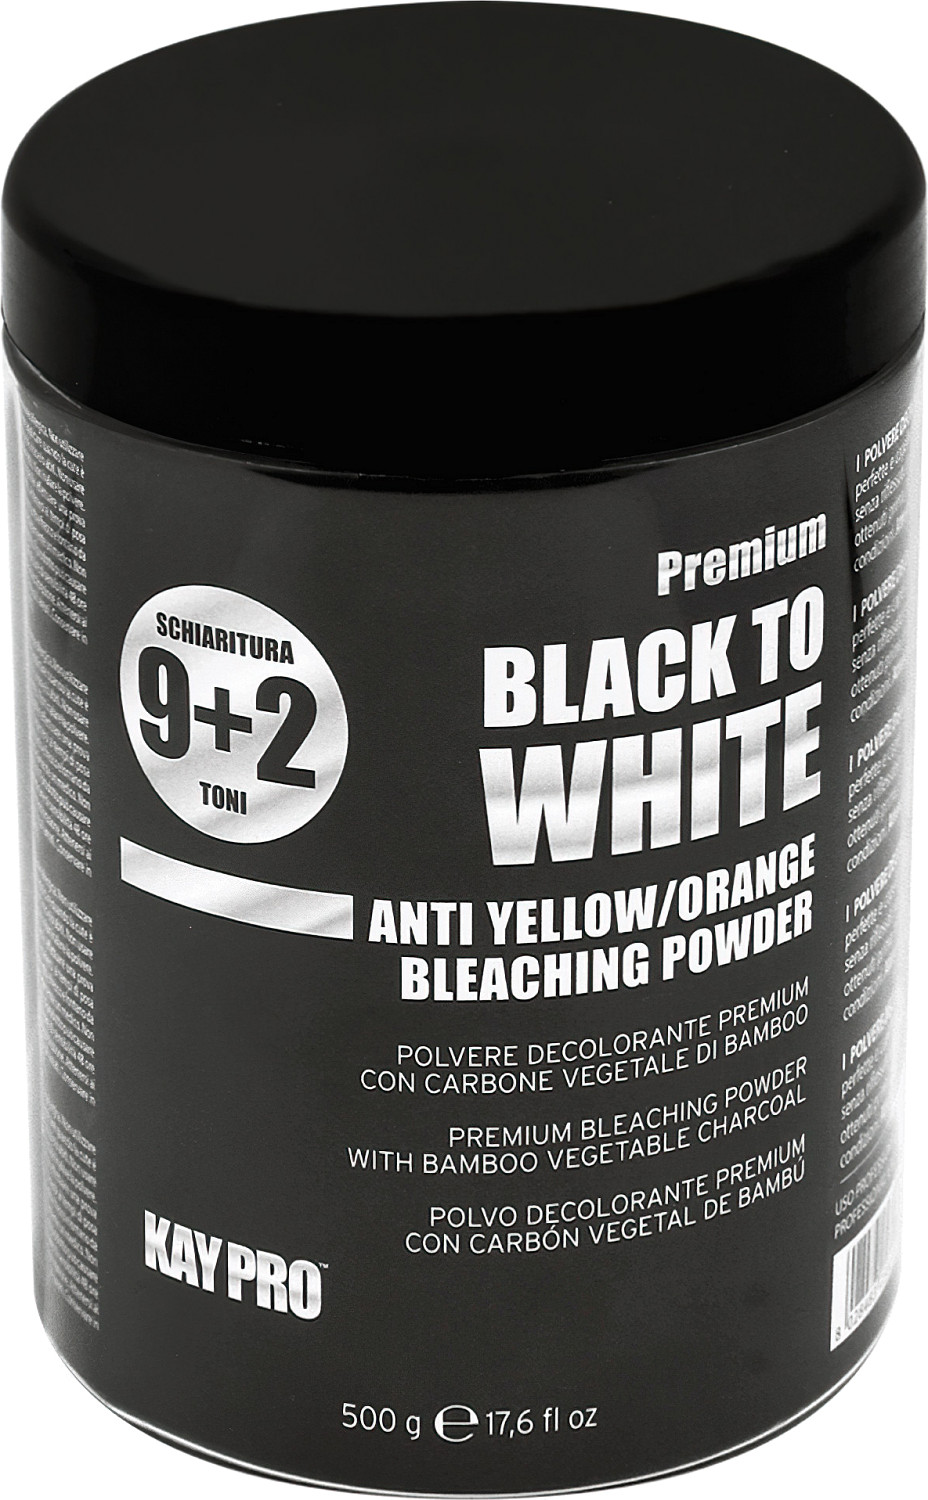  Kay Pro Black to White 9+2 Bleaching Powder 500g 